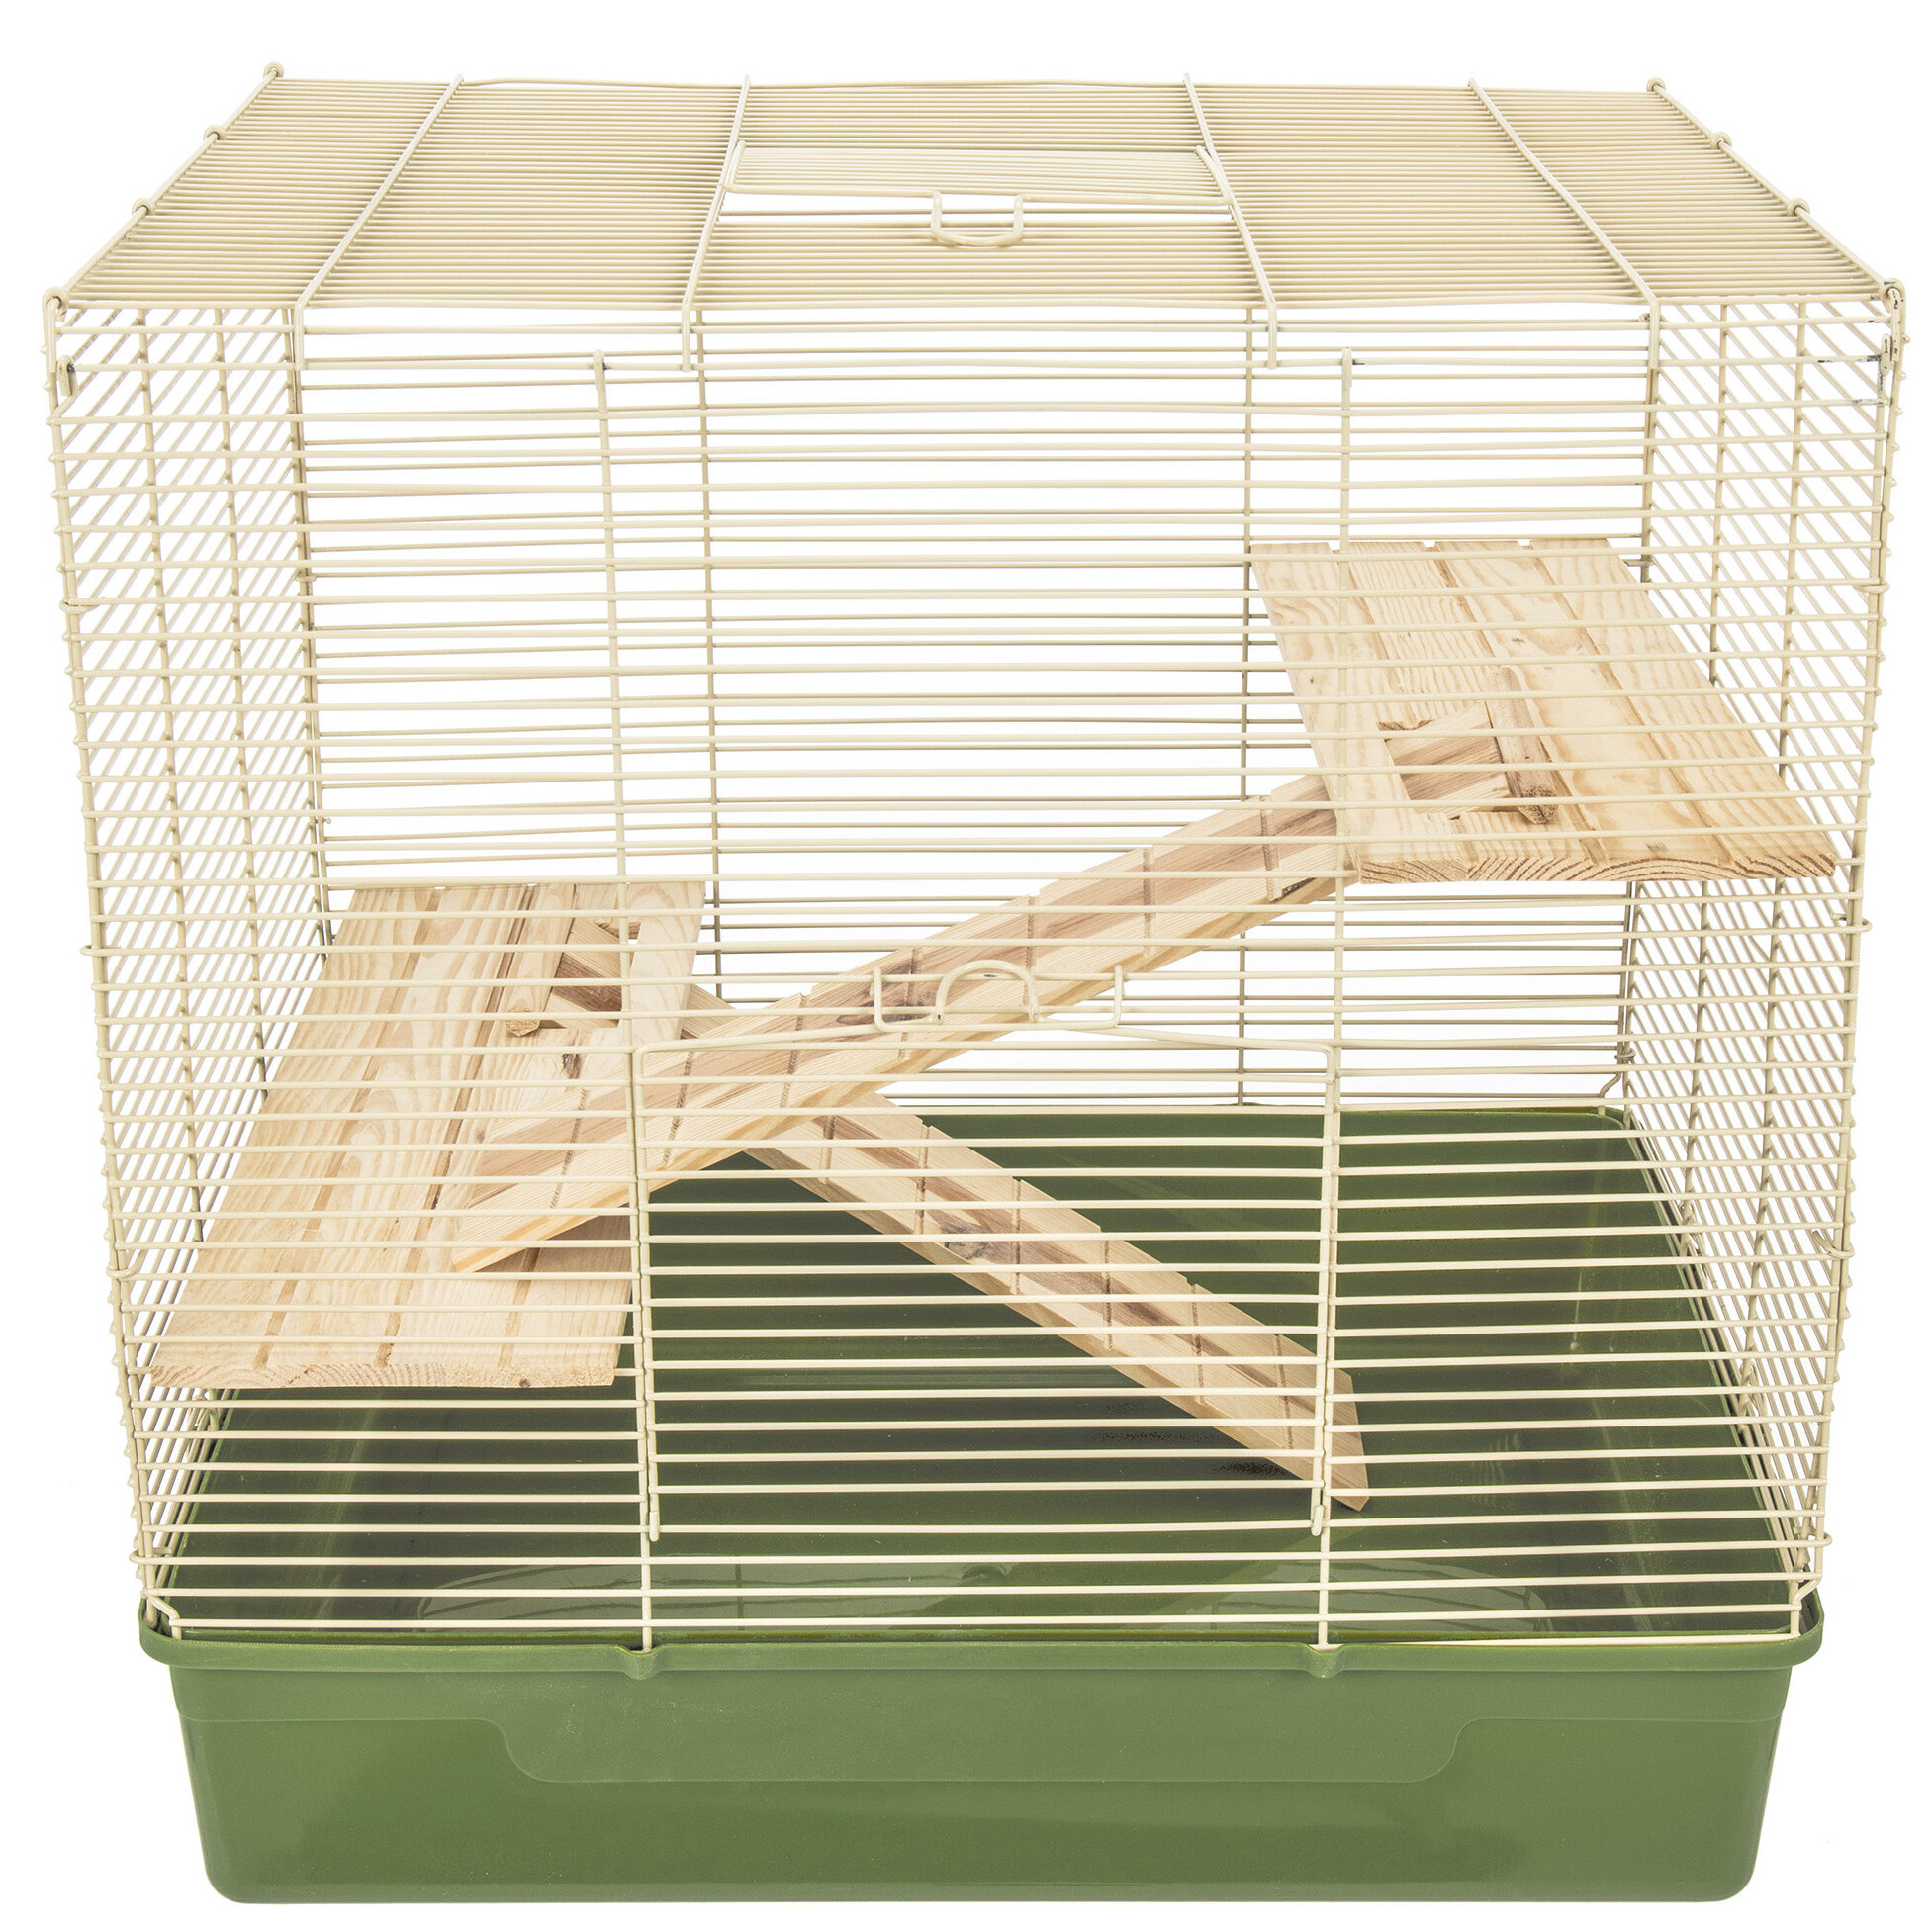 acrylic rat cage